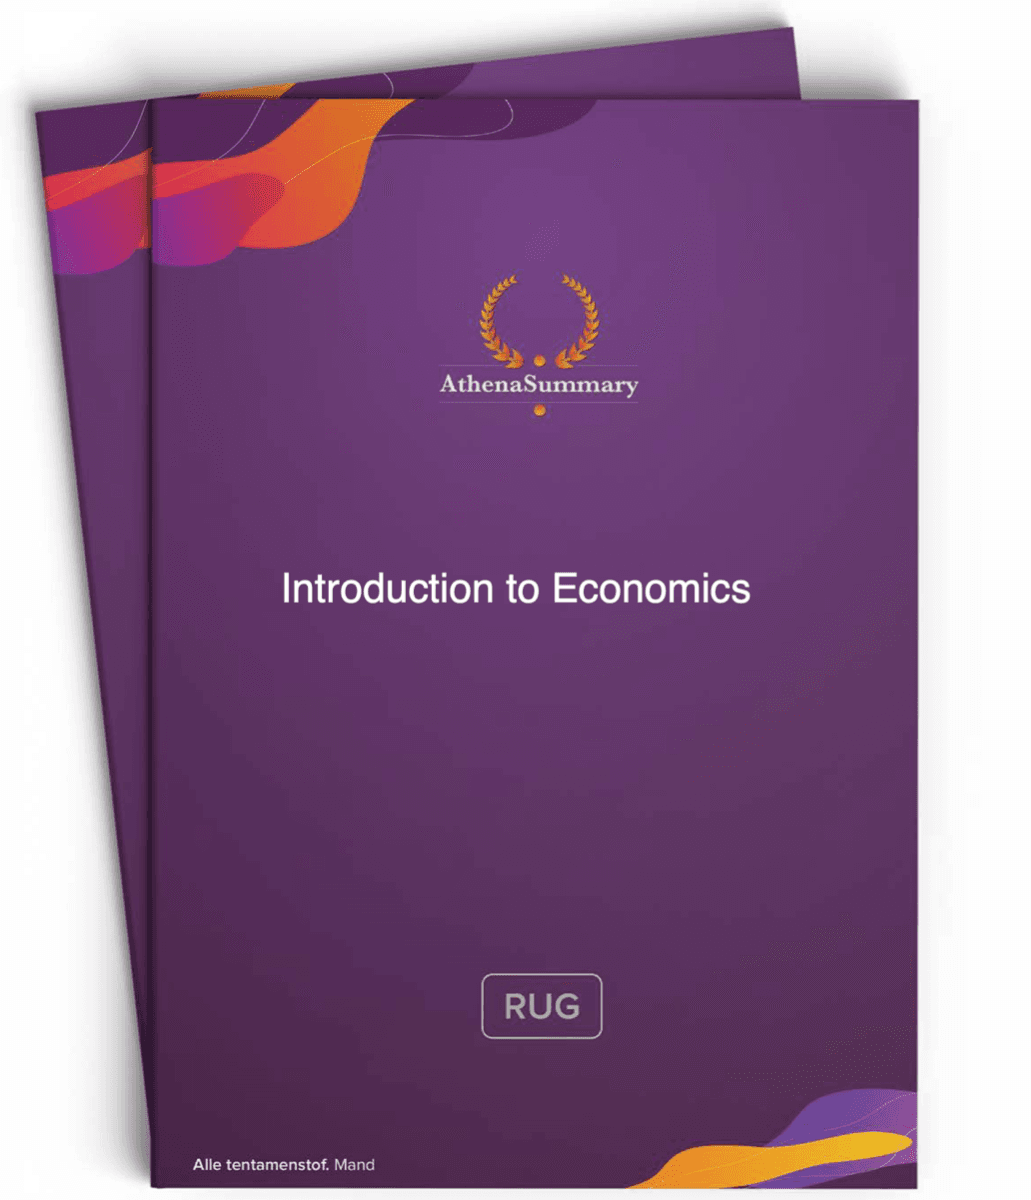 Literature Summary - Introduction to Economics